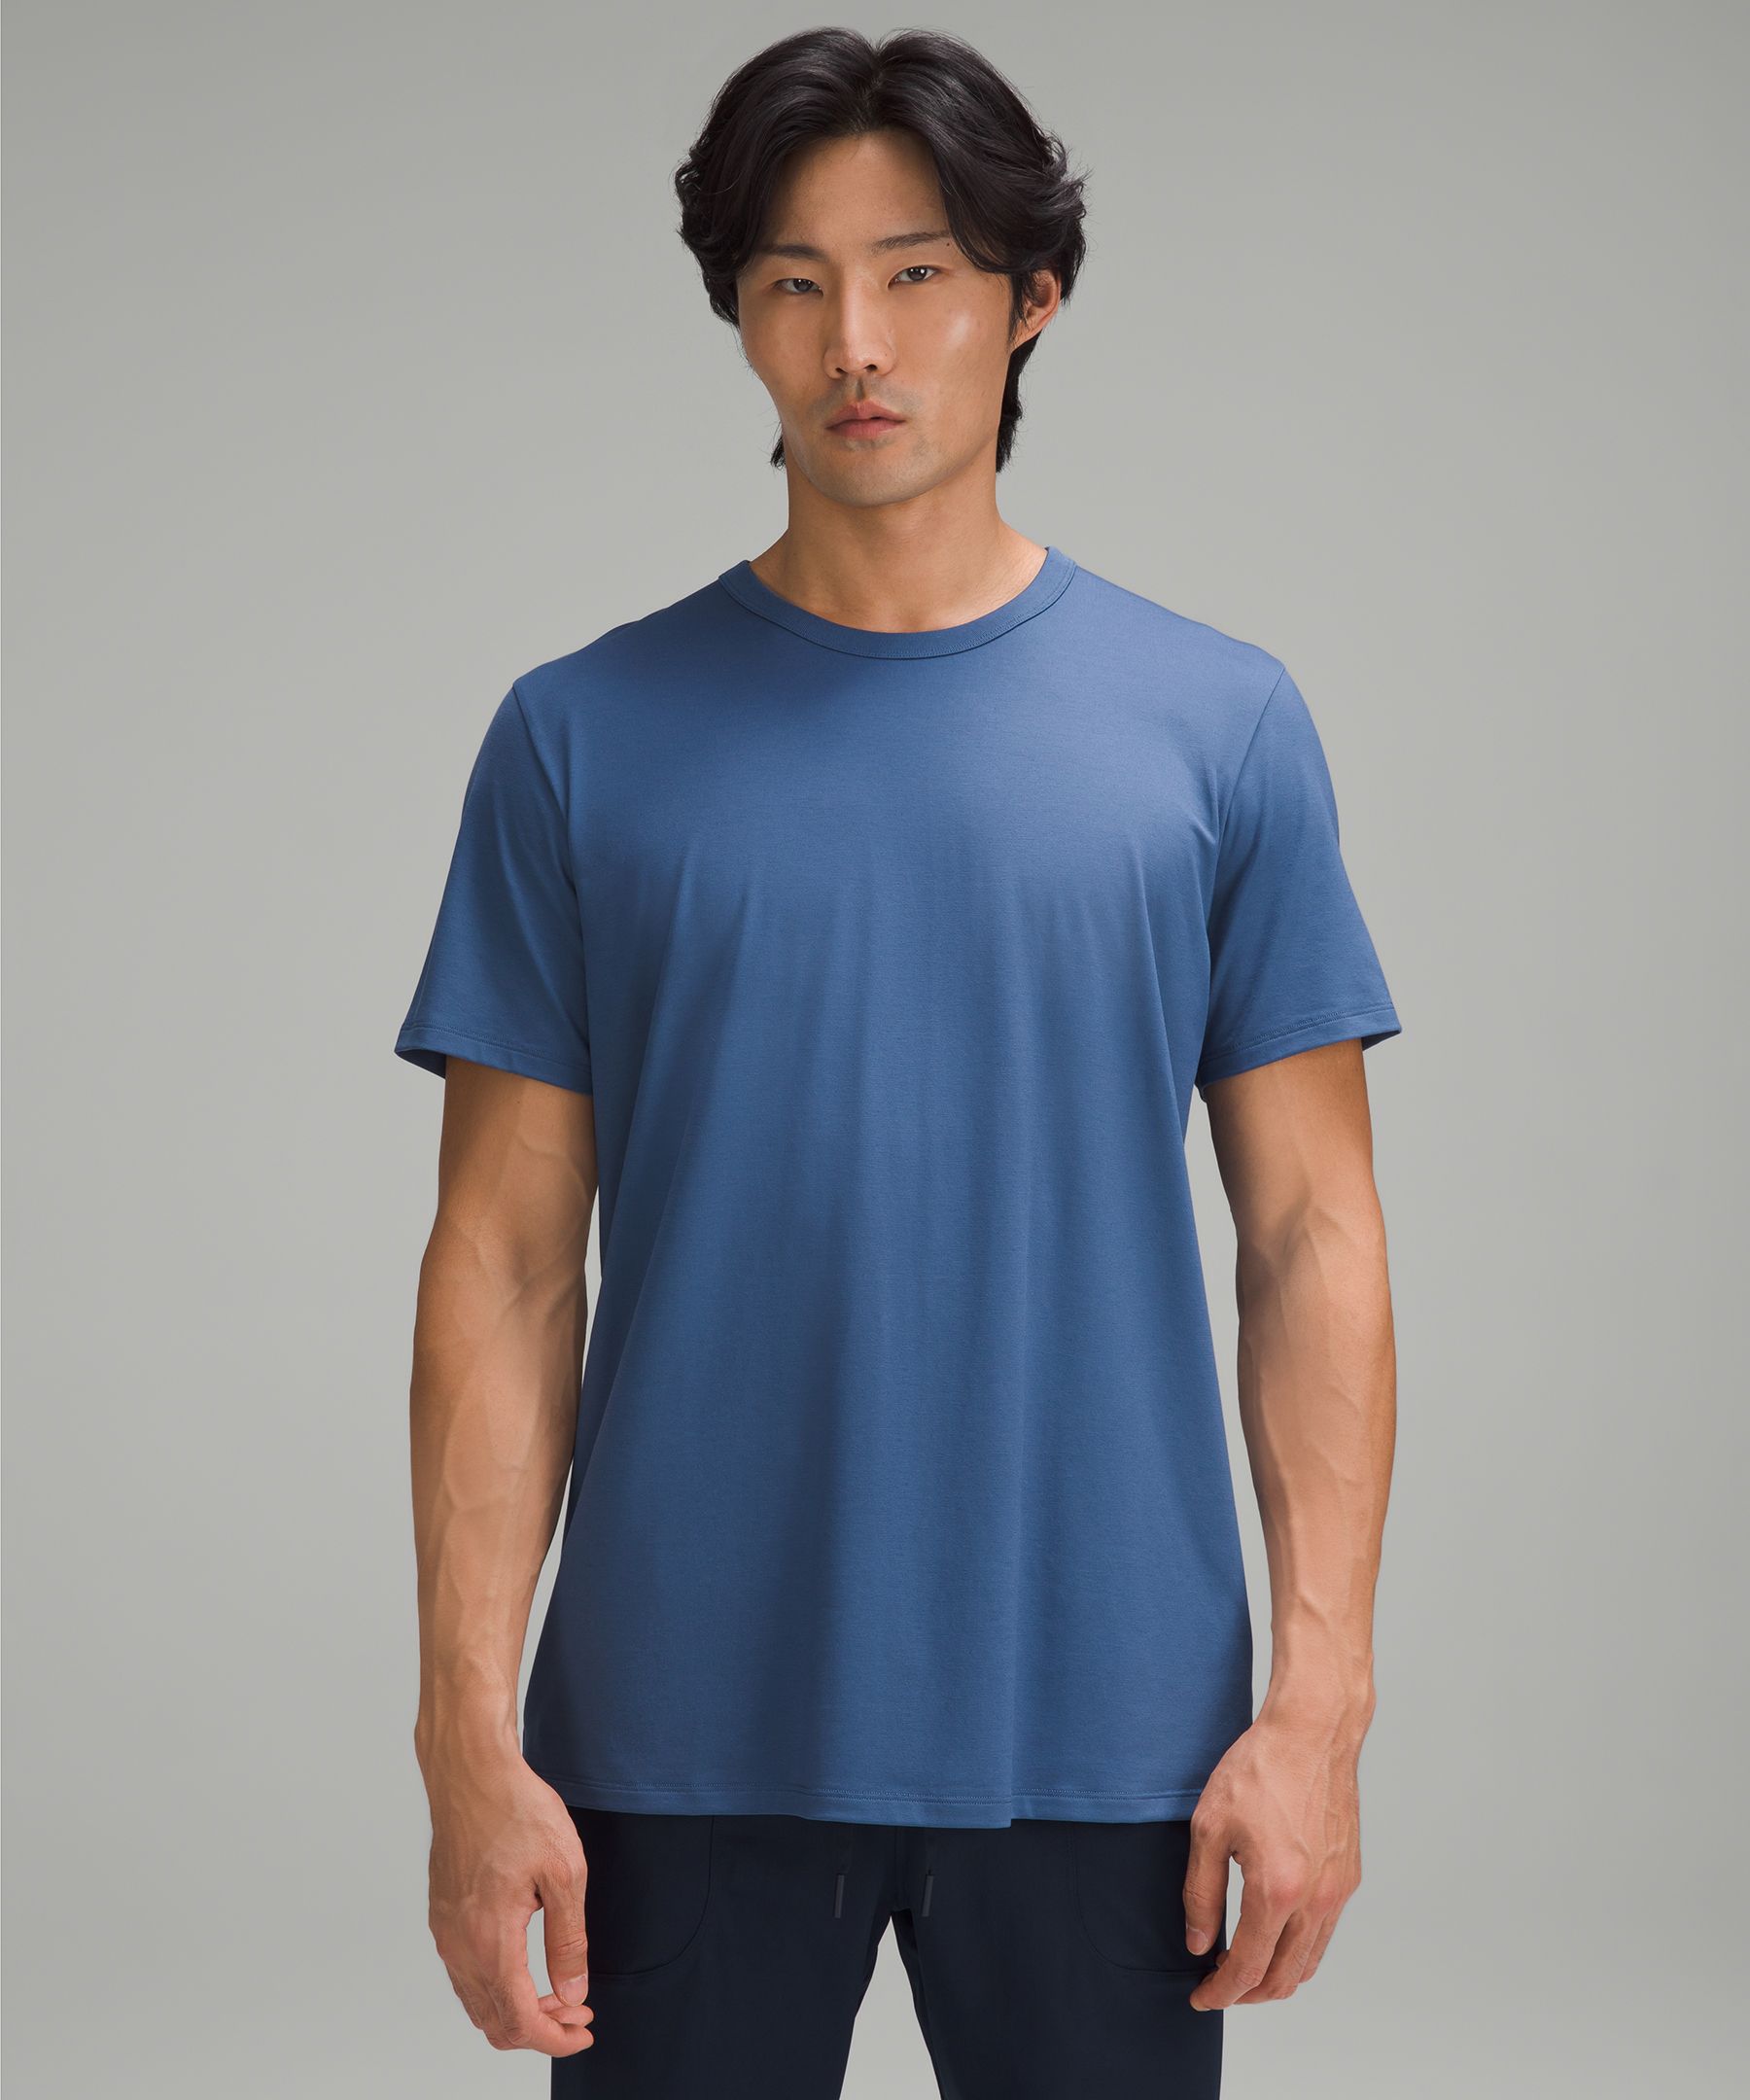 Lululemon The Fundamental T-shirt In Capture Blue